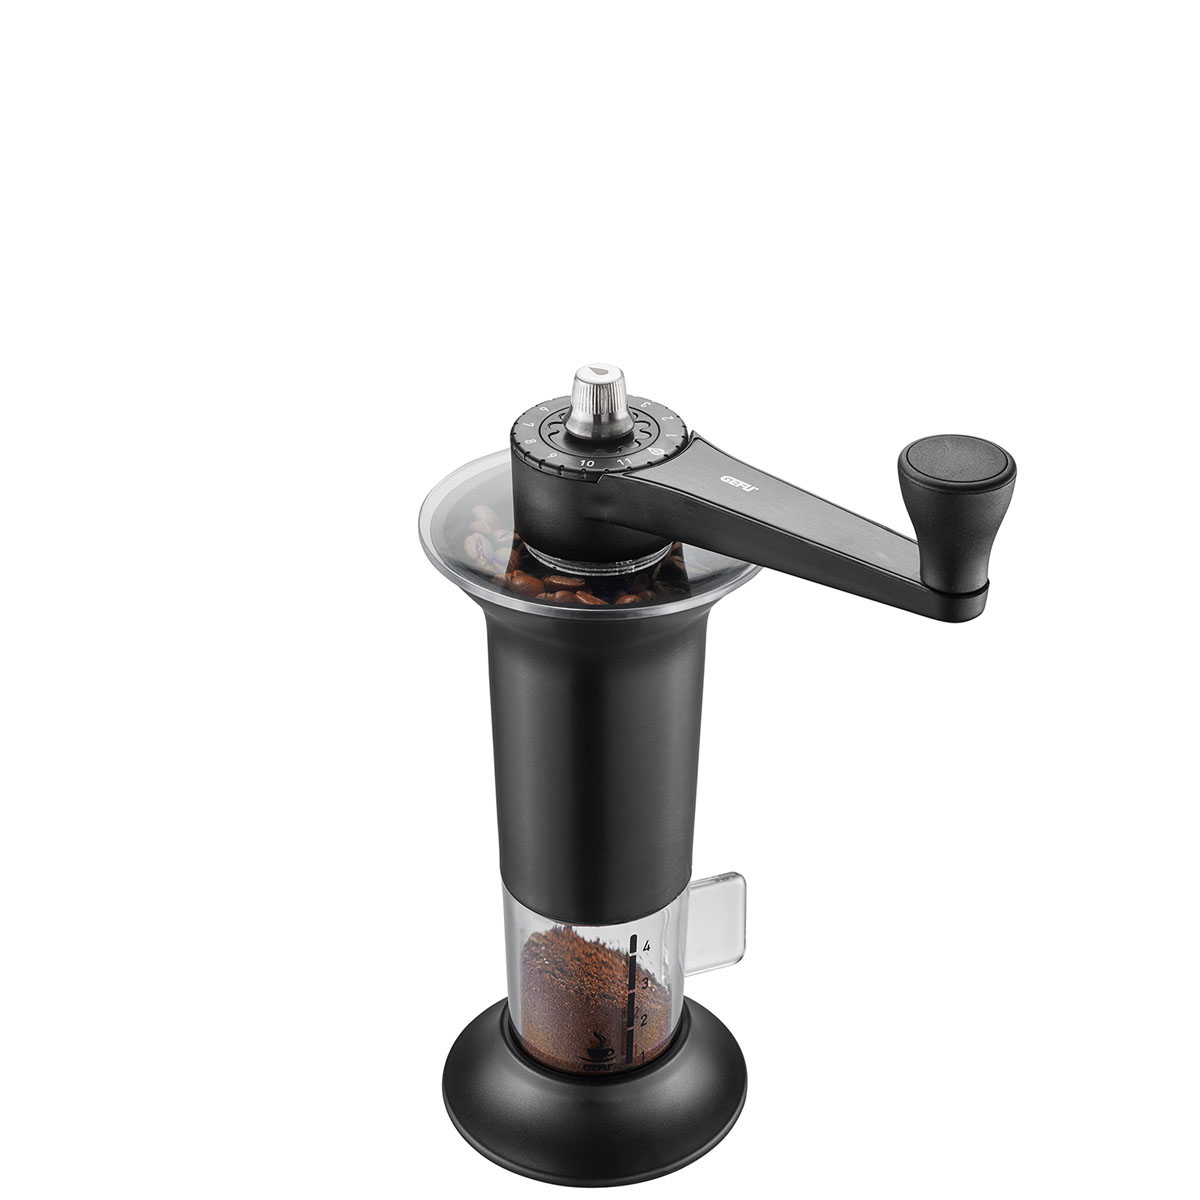 Coffee grinder LORENZO, black